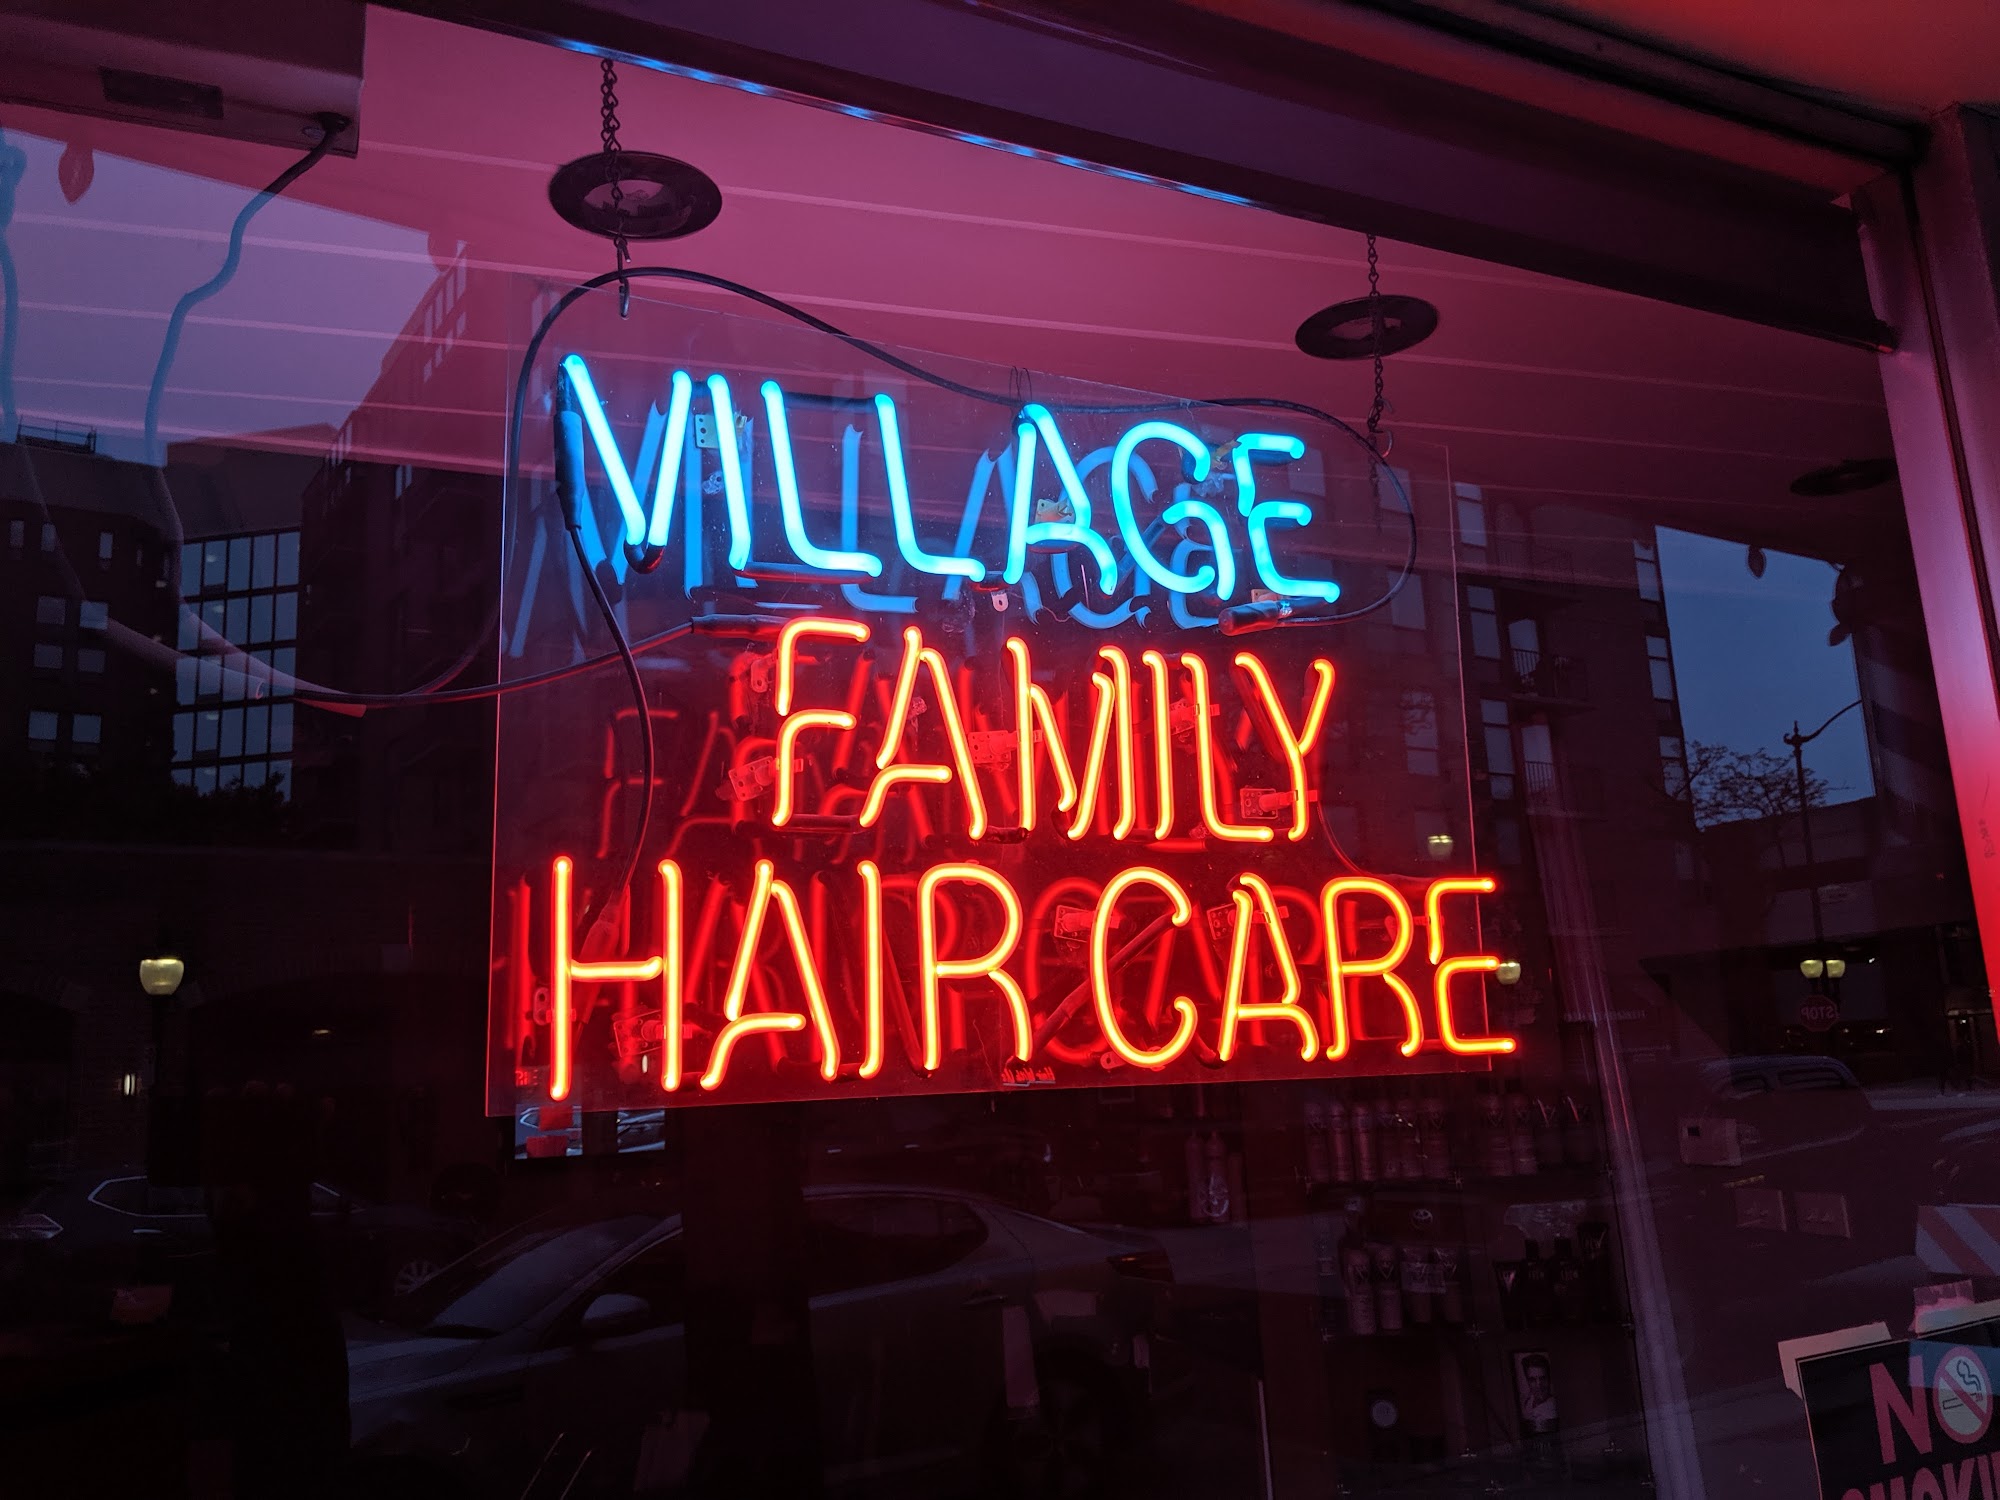 Village Family Hair Care